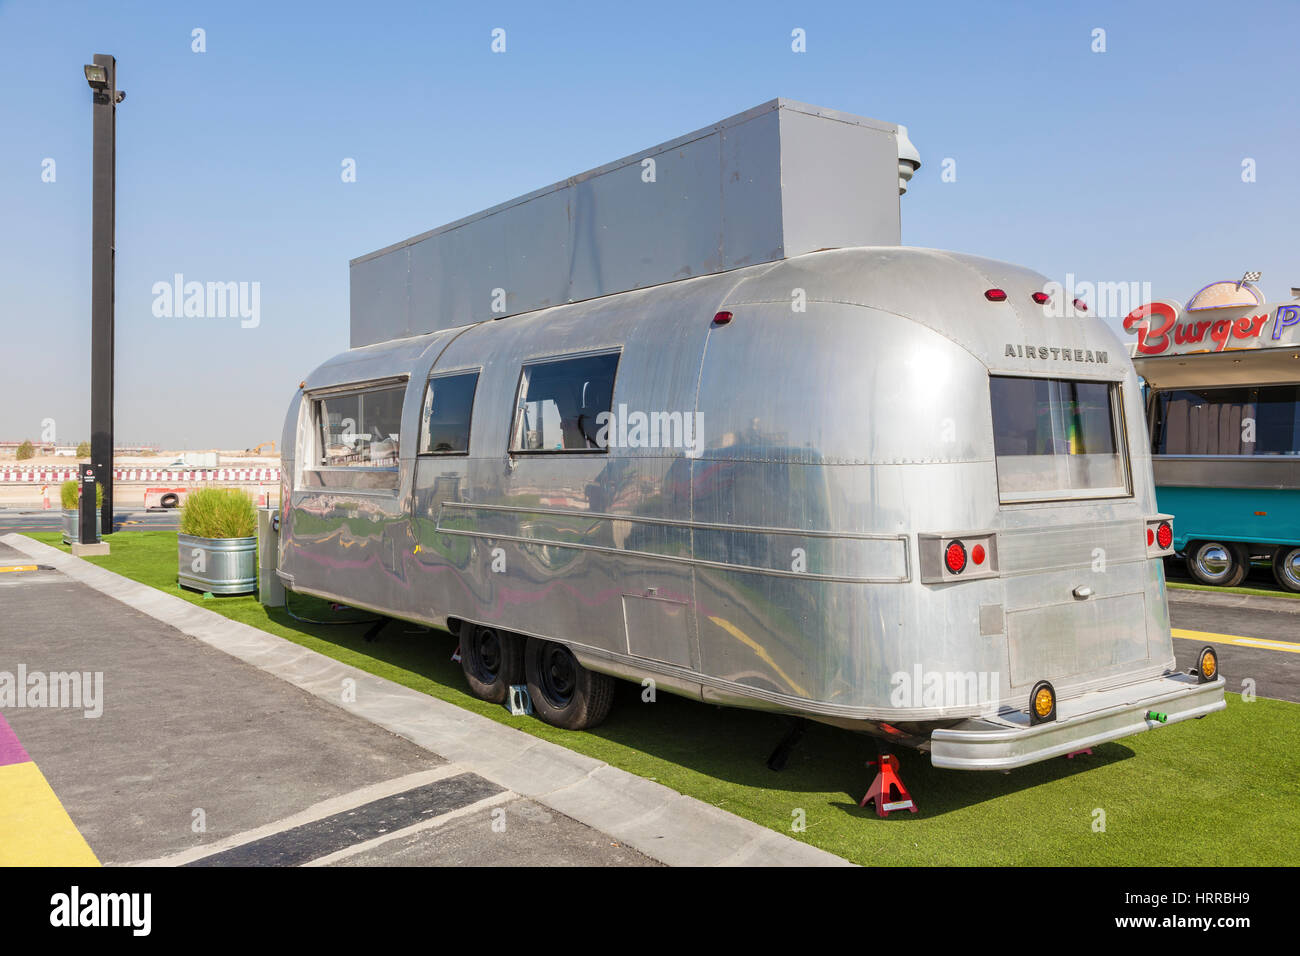 DUBAI, UAE - NOV 27, 2016: Airstream caravan food truck at the Last Exit food trucks park on the E11 highway between Abu Dhabi and Dubai Stock Photo